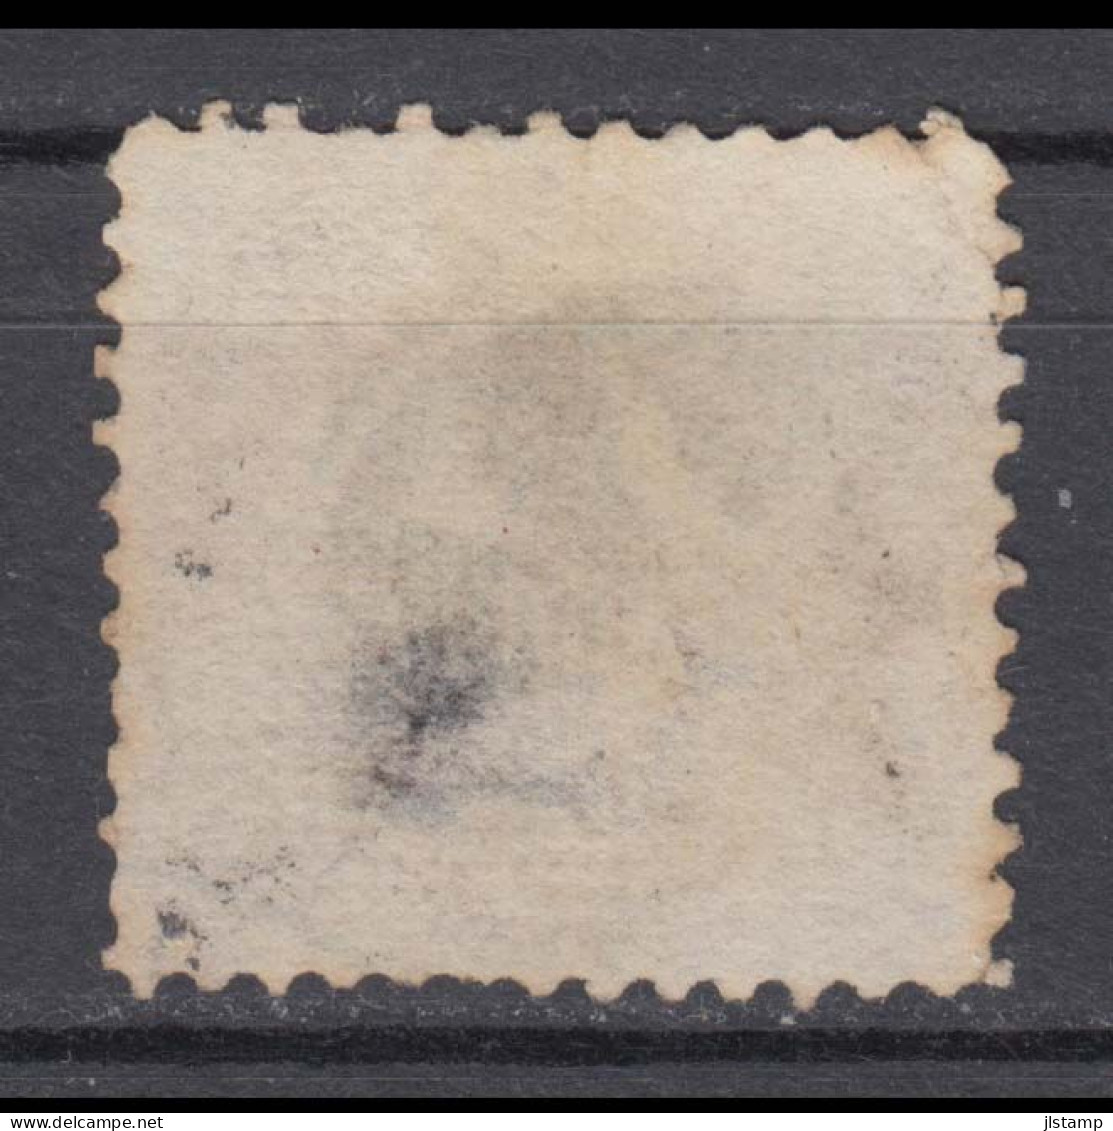 US 1869 Post Horse And Rider 2c,Grill,fine Used Stamp ,Scott#113,VF, $85 - Gebruikt